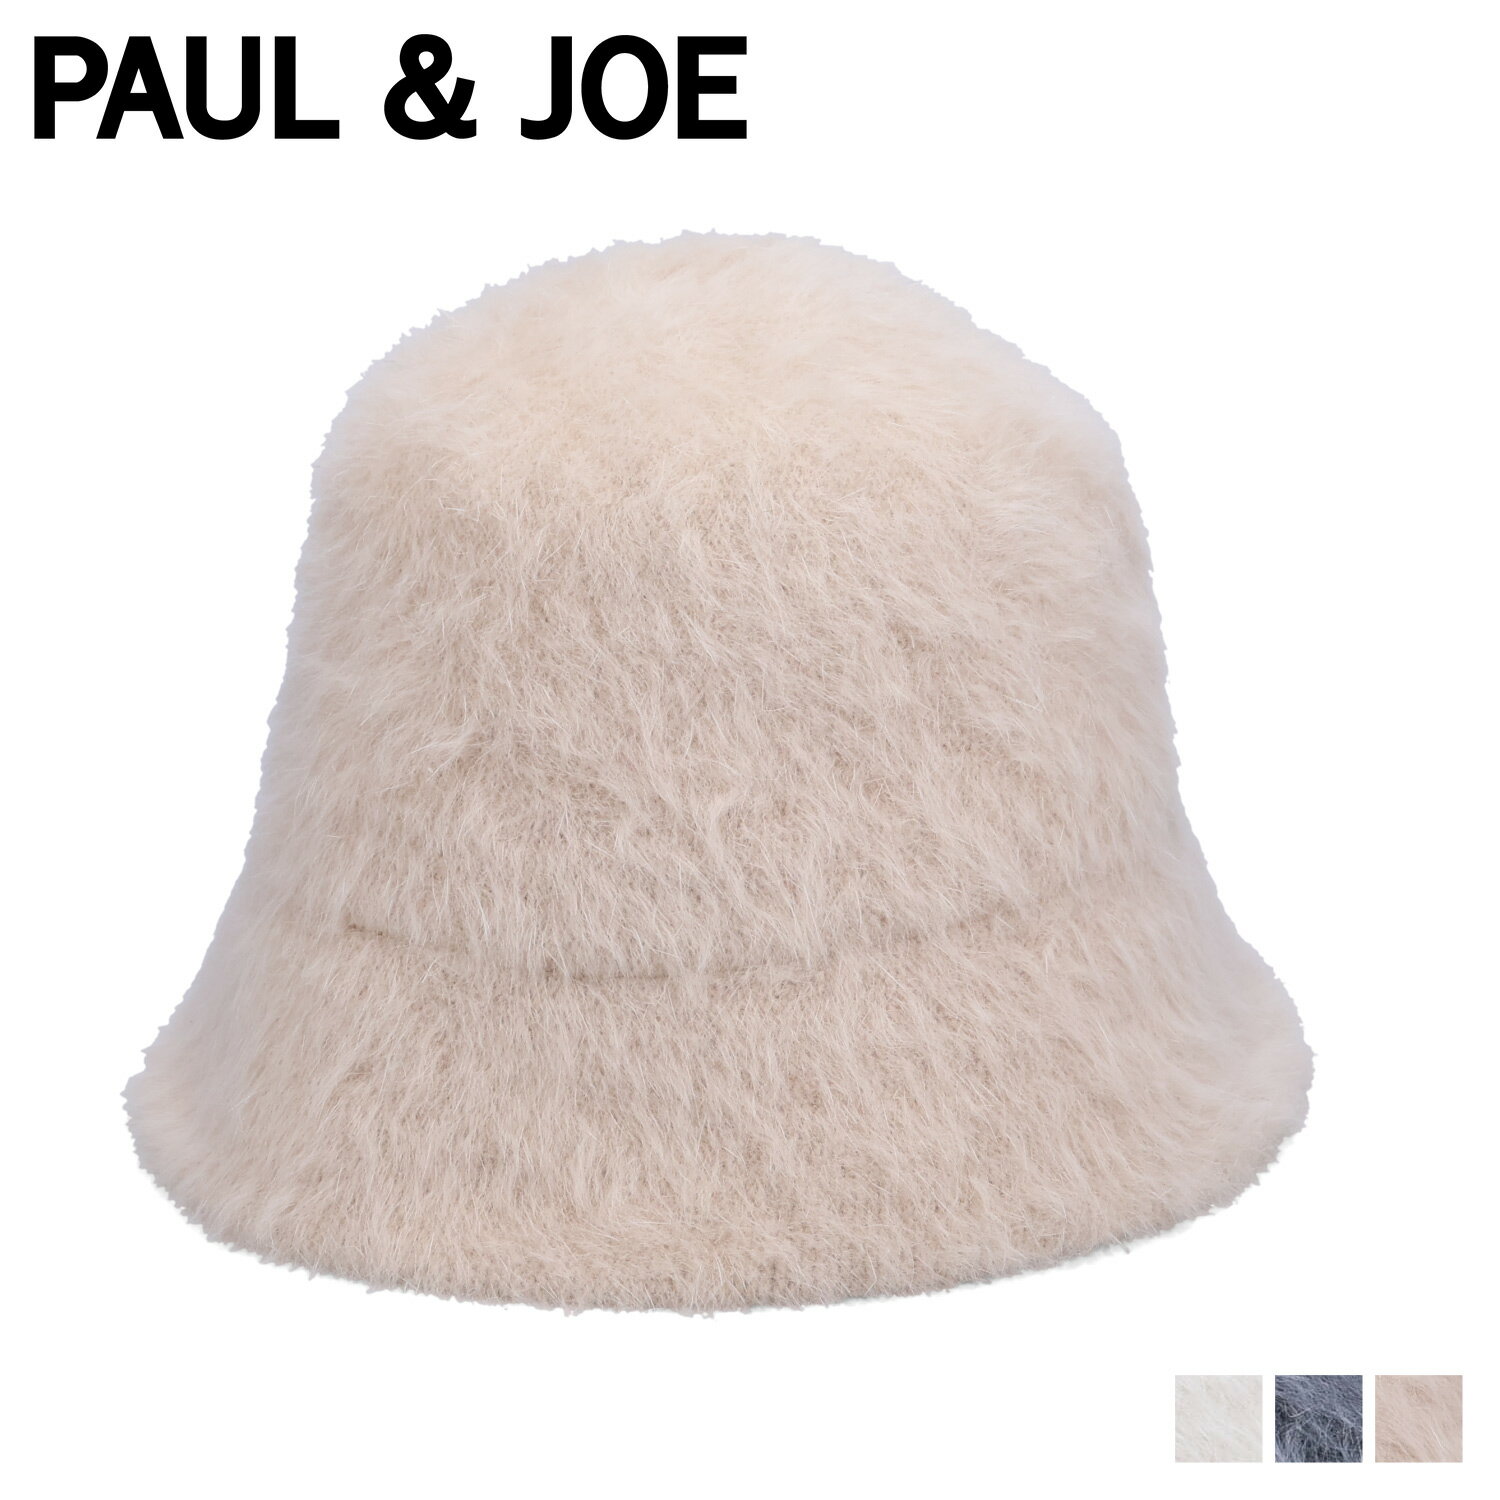 PAUL & JOE ポールアンドジョー クロシェハット 帽子 レディース 猫 CROCHET HAT ホワイト グレー ベージュ 白 69906-03 母の日